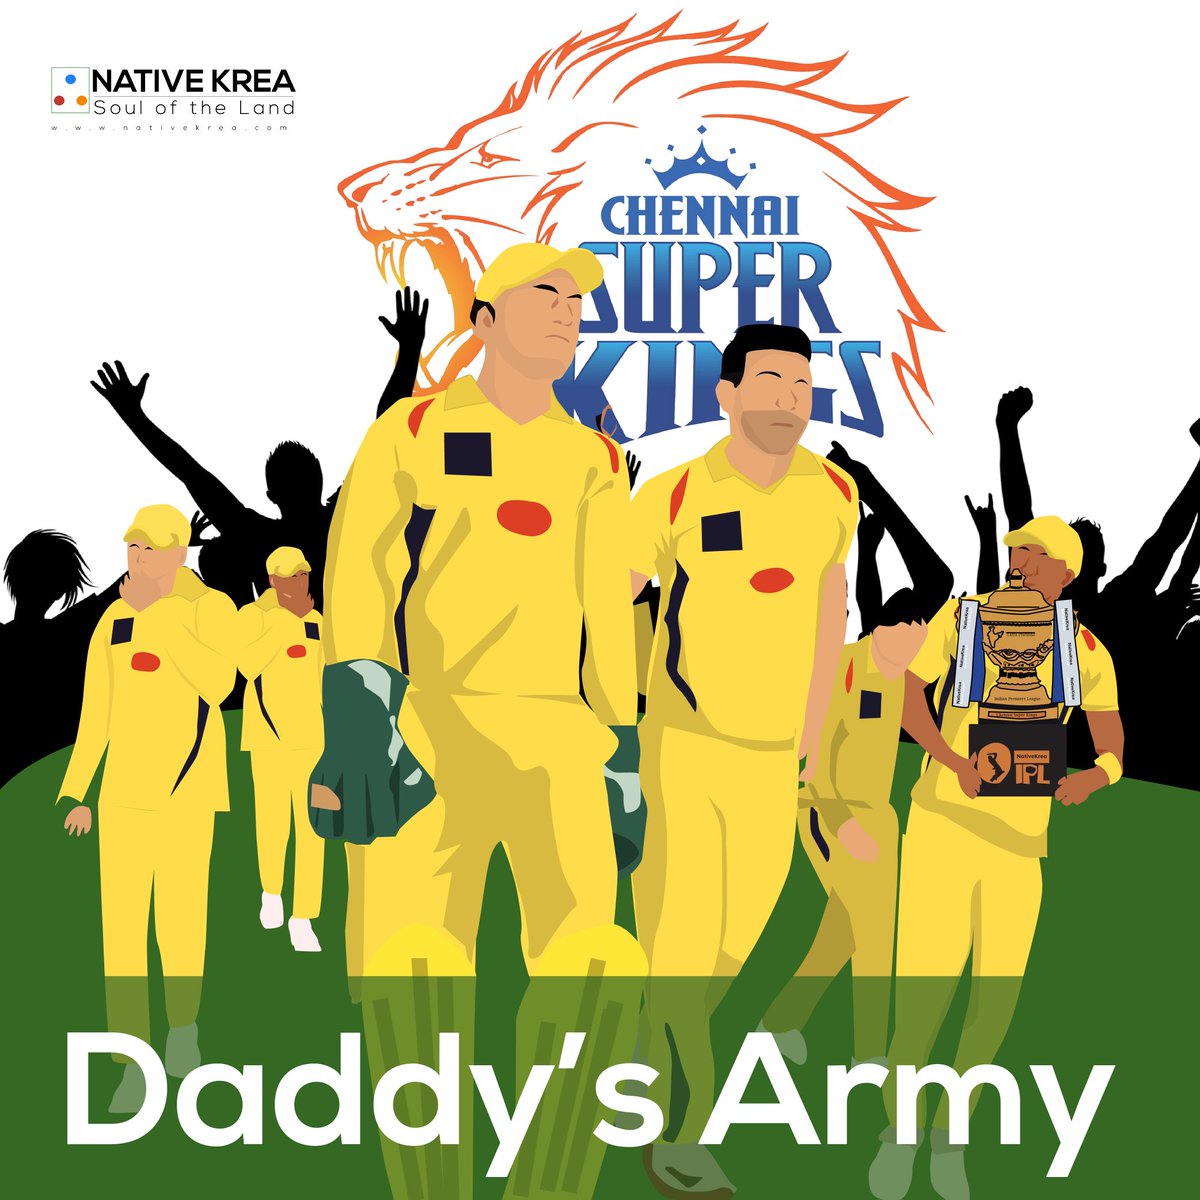 Daddy's Army . @krea_native . . . #dady #love #father #dad #family #baby #usa #america #s #uk #instagram #brazil #warplane #military #soldier #struggles #driver #armyday #war #us #ak #tanks #americans #freedom #ilovetheusa #usaarmy #ukarmy #army #instagood #bhfyp